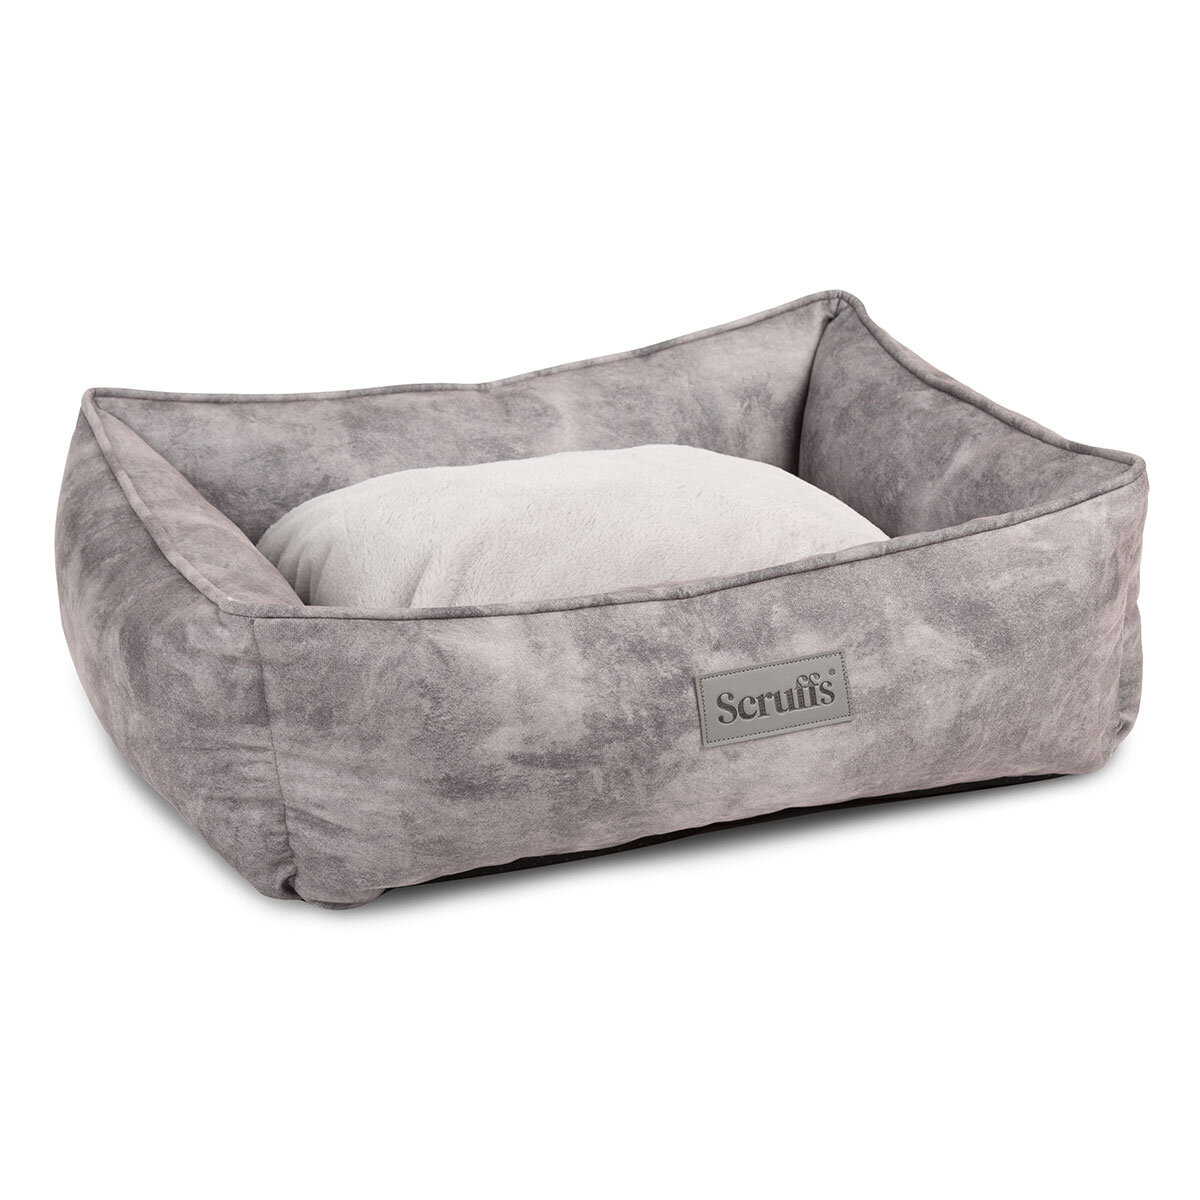 Scruffs® Kensington Pet Bed Medium, 60cm x 50cm in Grey